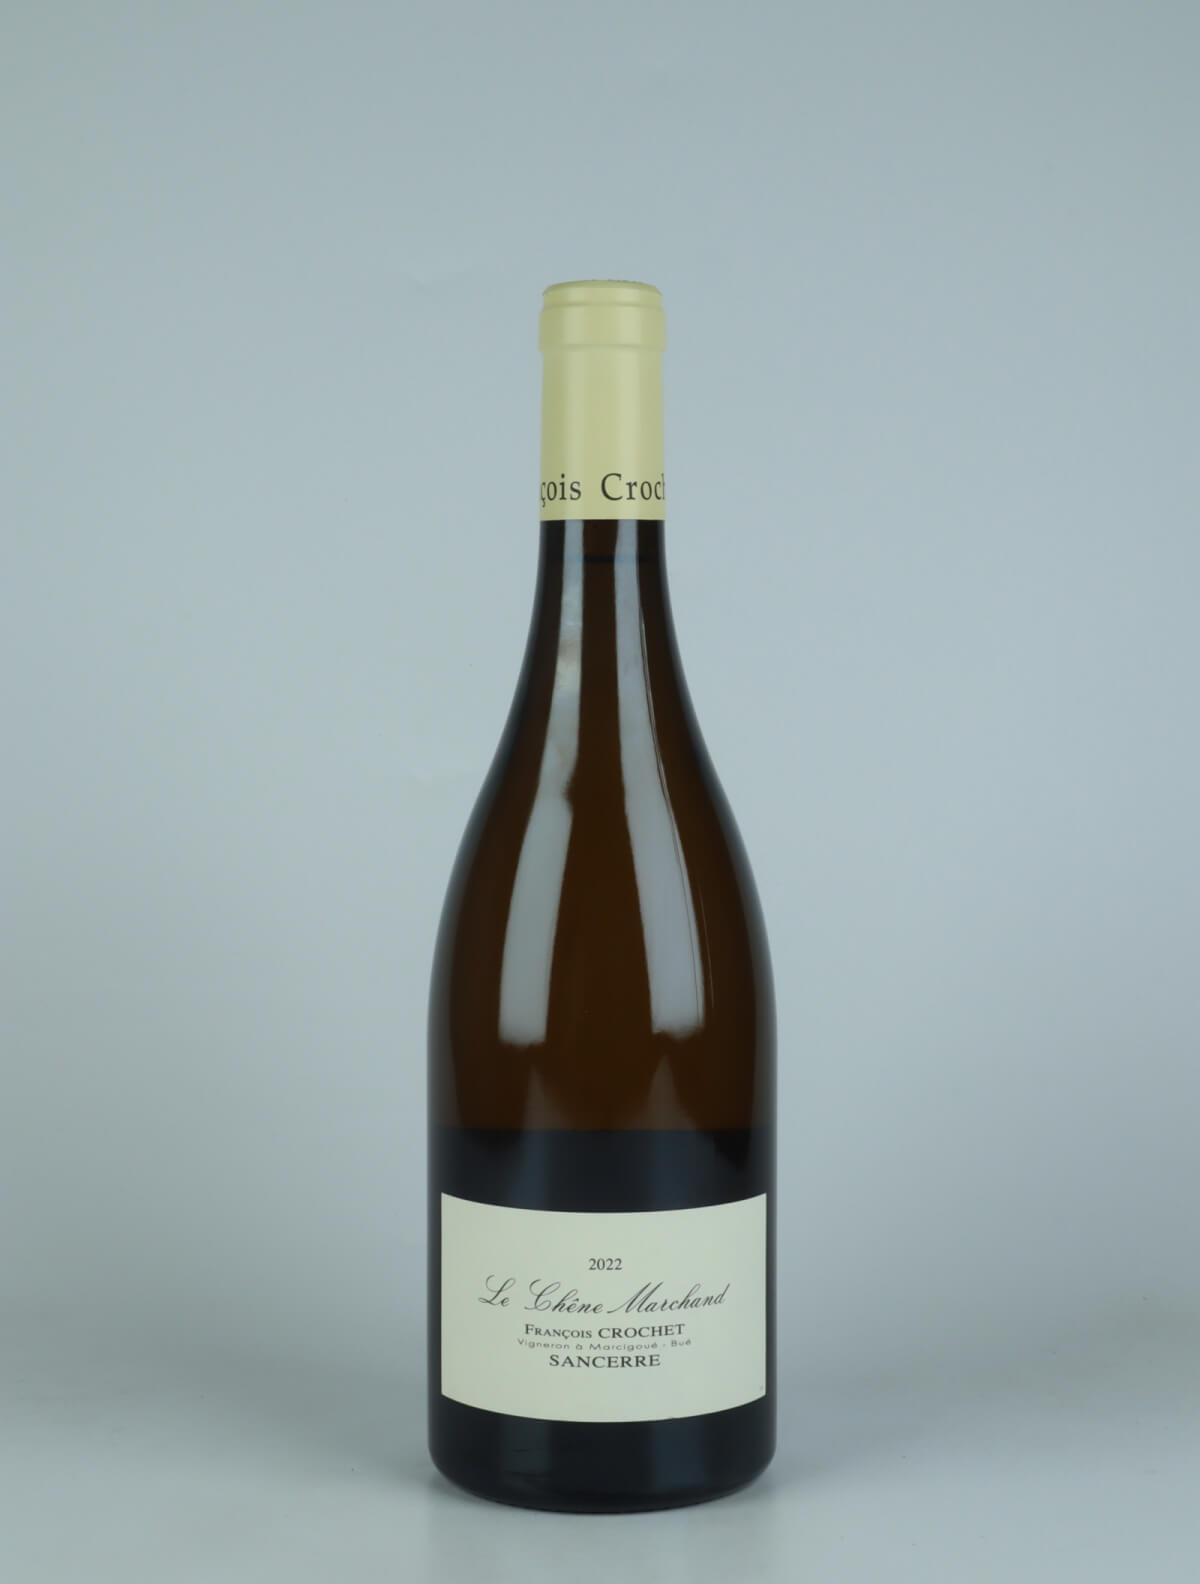 A bottle 2022 Sancerre Blanc- Le Chêne Marchand White wine from François Crochet, Loire in France